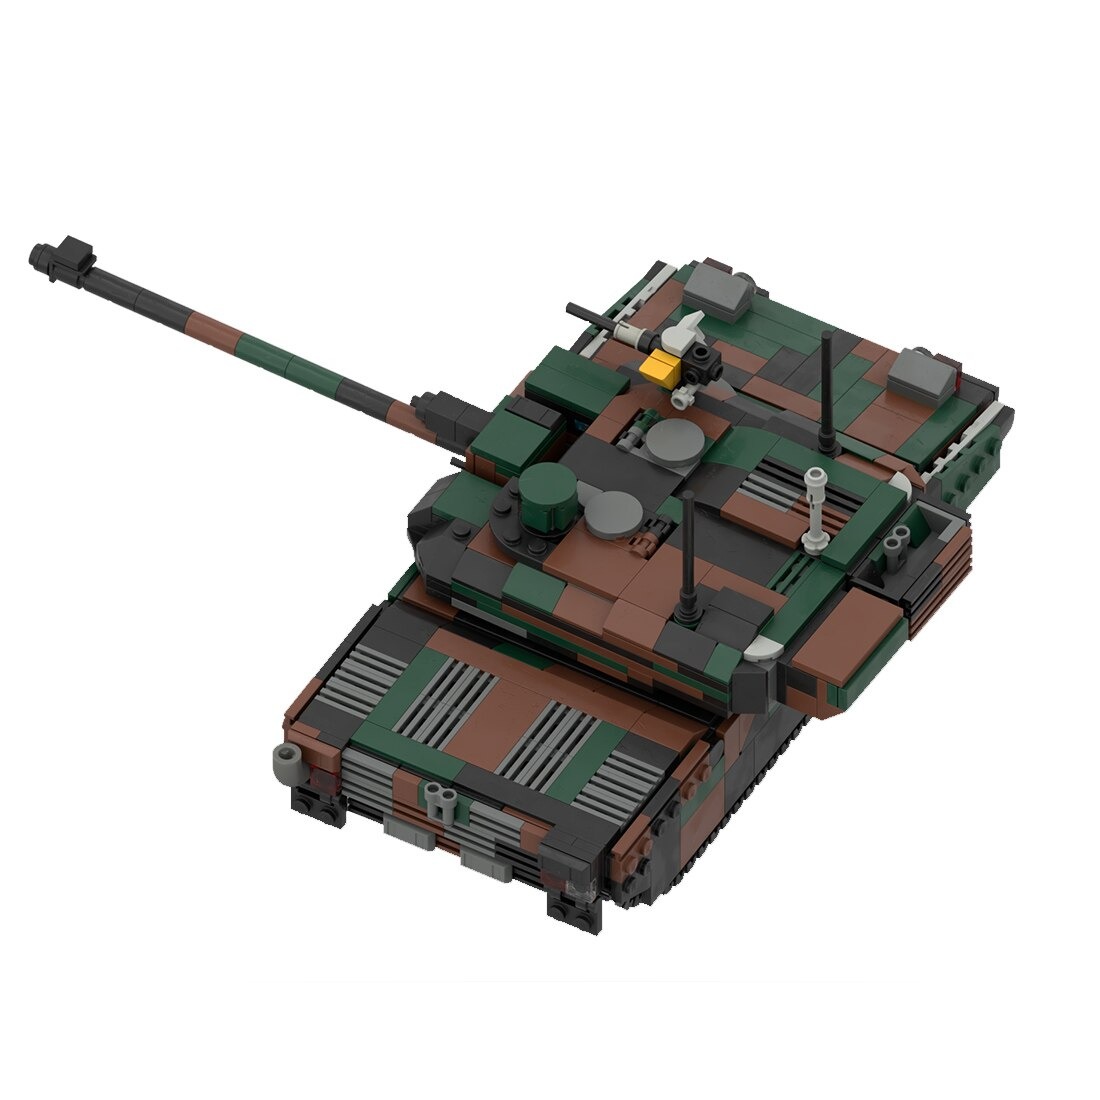 moc 34858 leclerc main battle tank model main 1 - MOULD KING